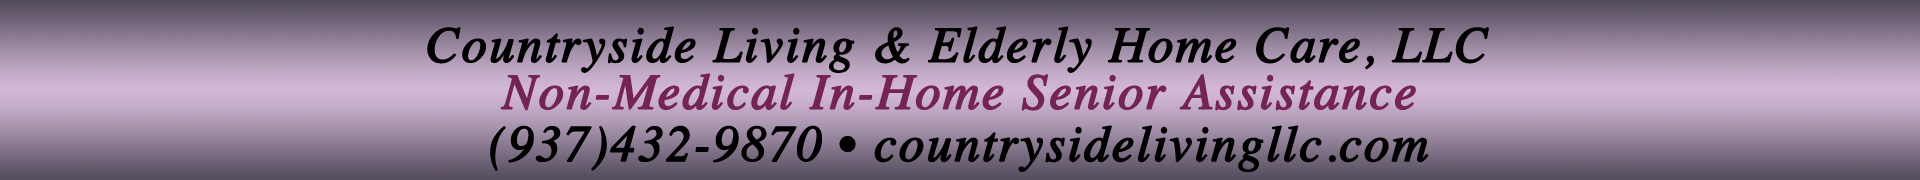 Countryside Living Elderly Home Care